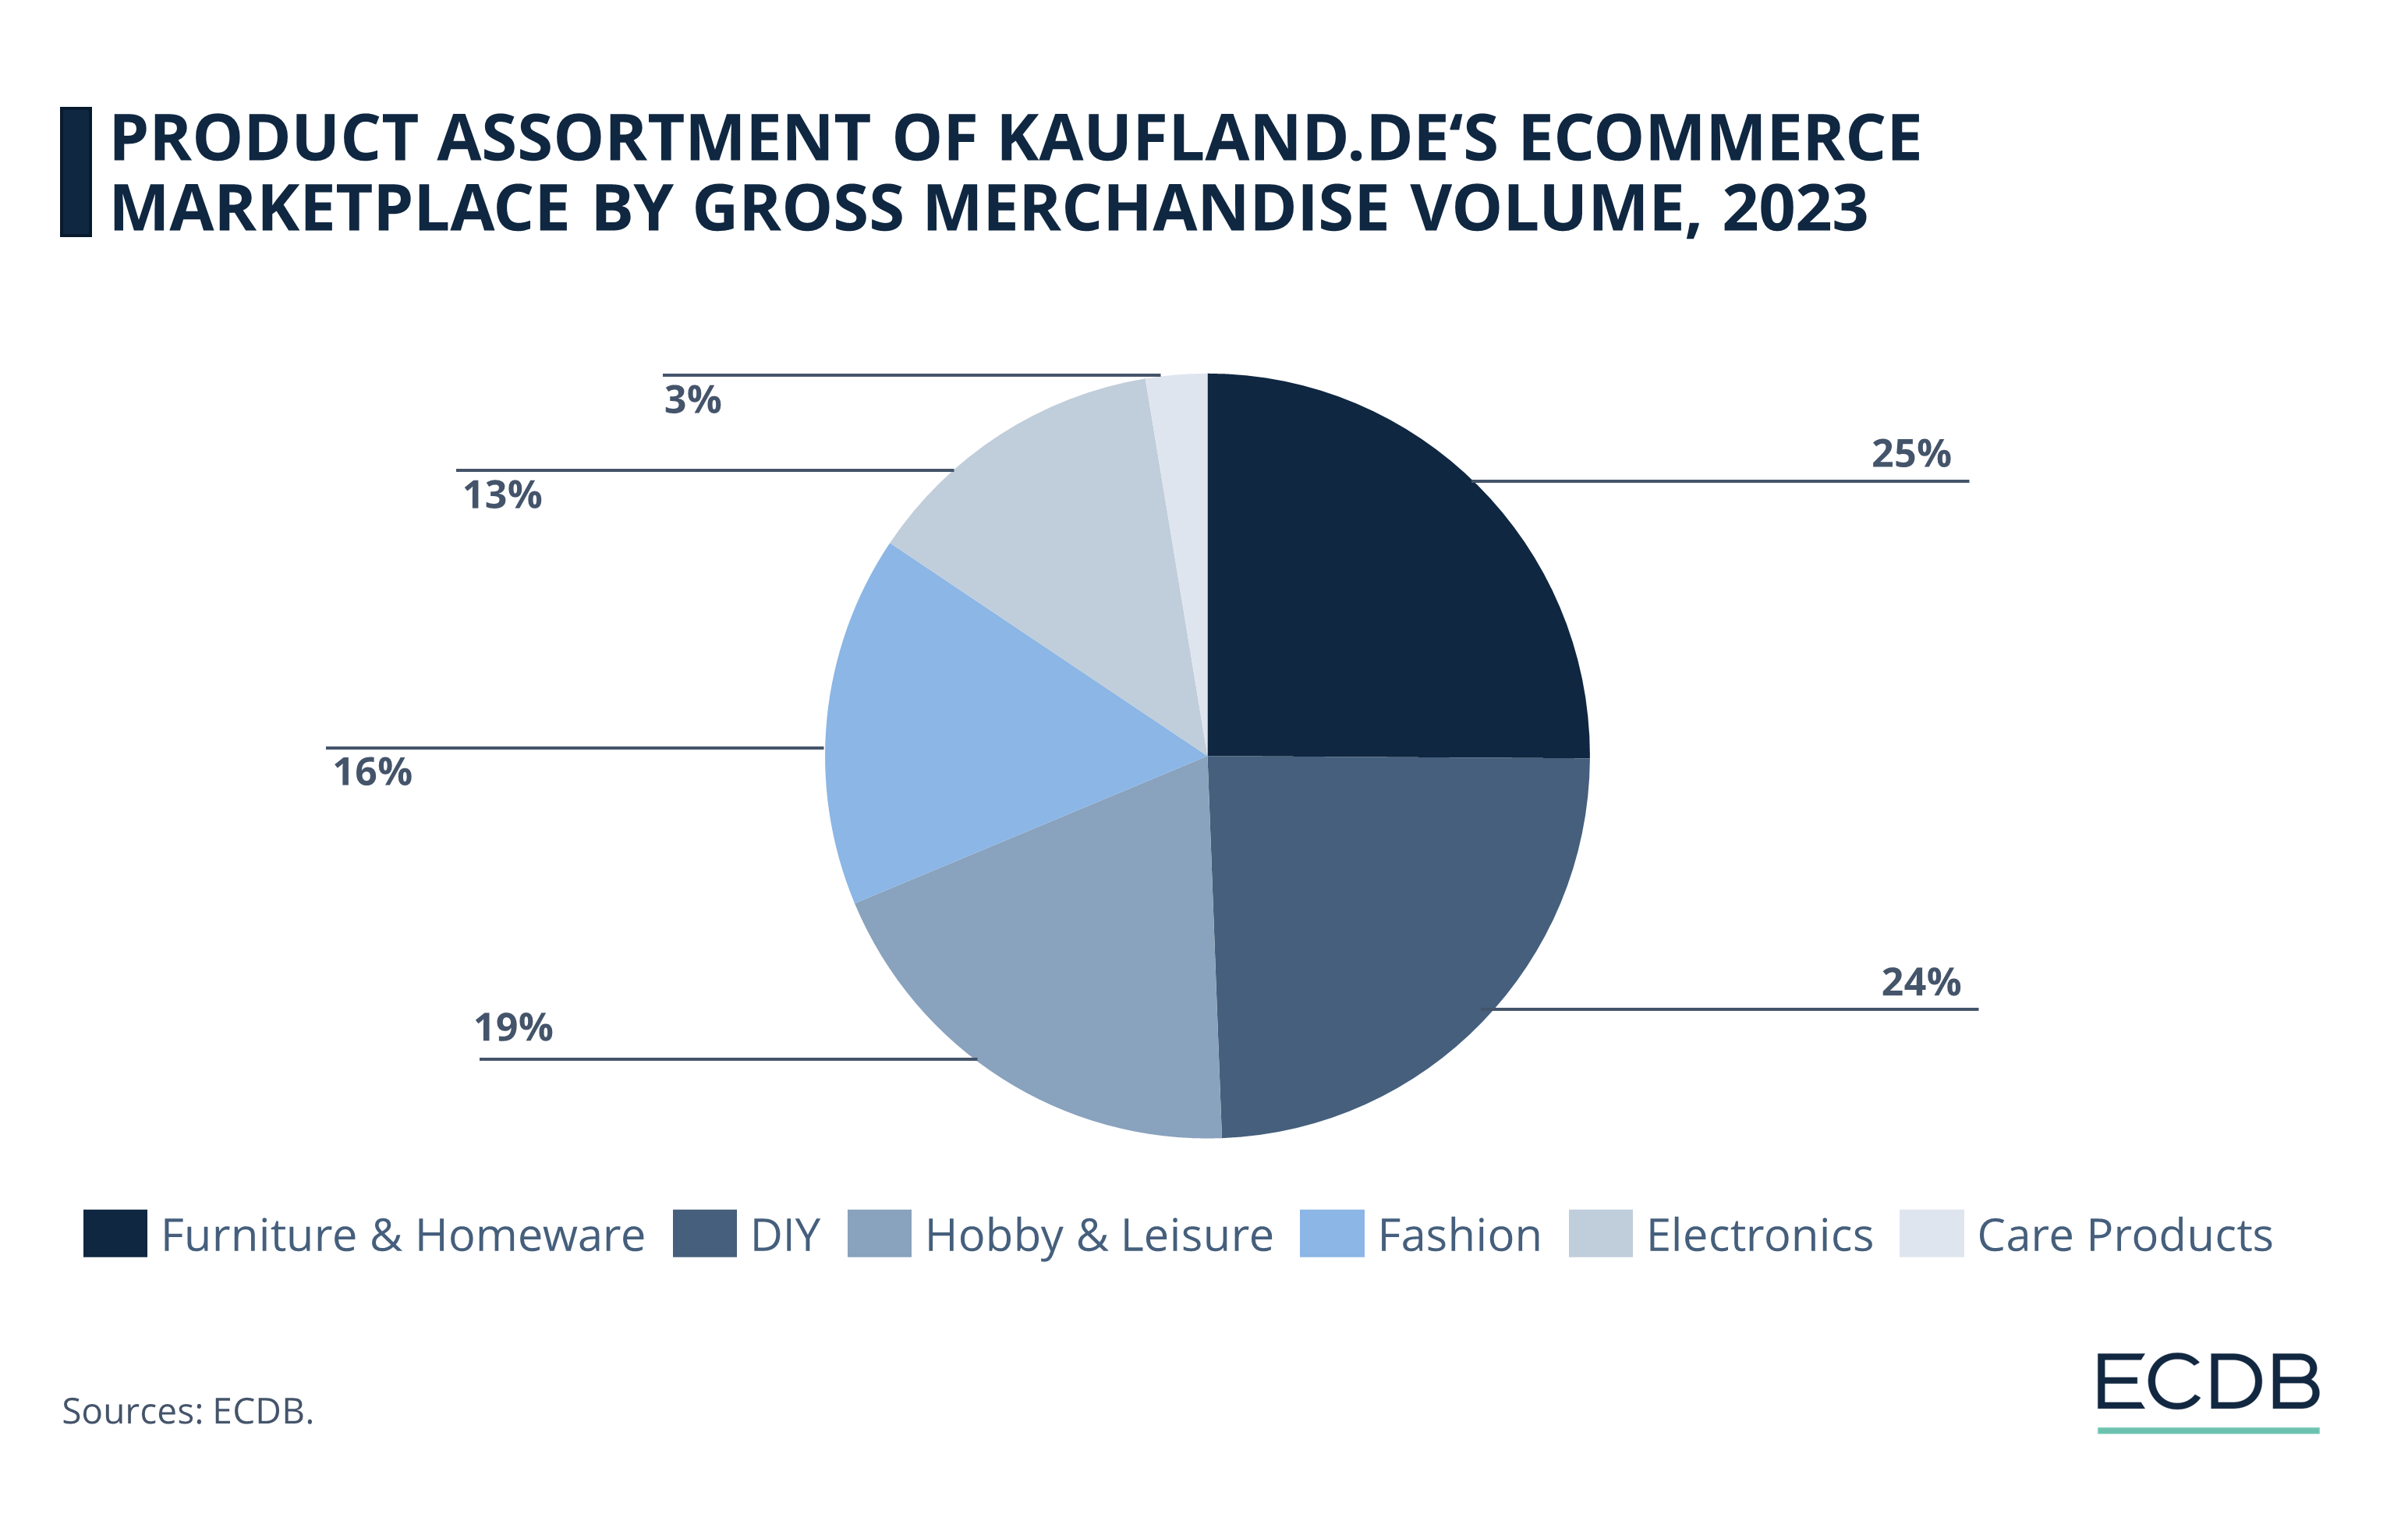 Product Assortment of Kaufland.de's eCommerce Marketplace by Gross Merchandise Volume, 2023